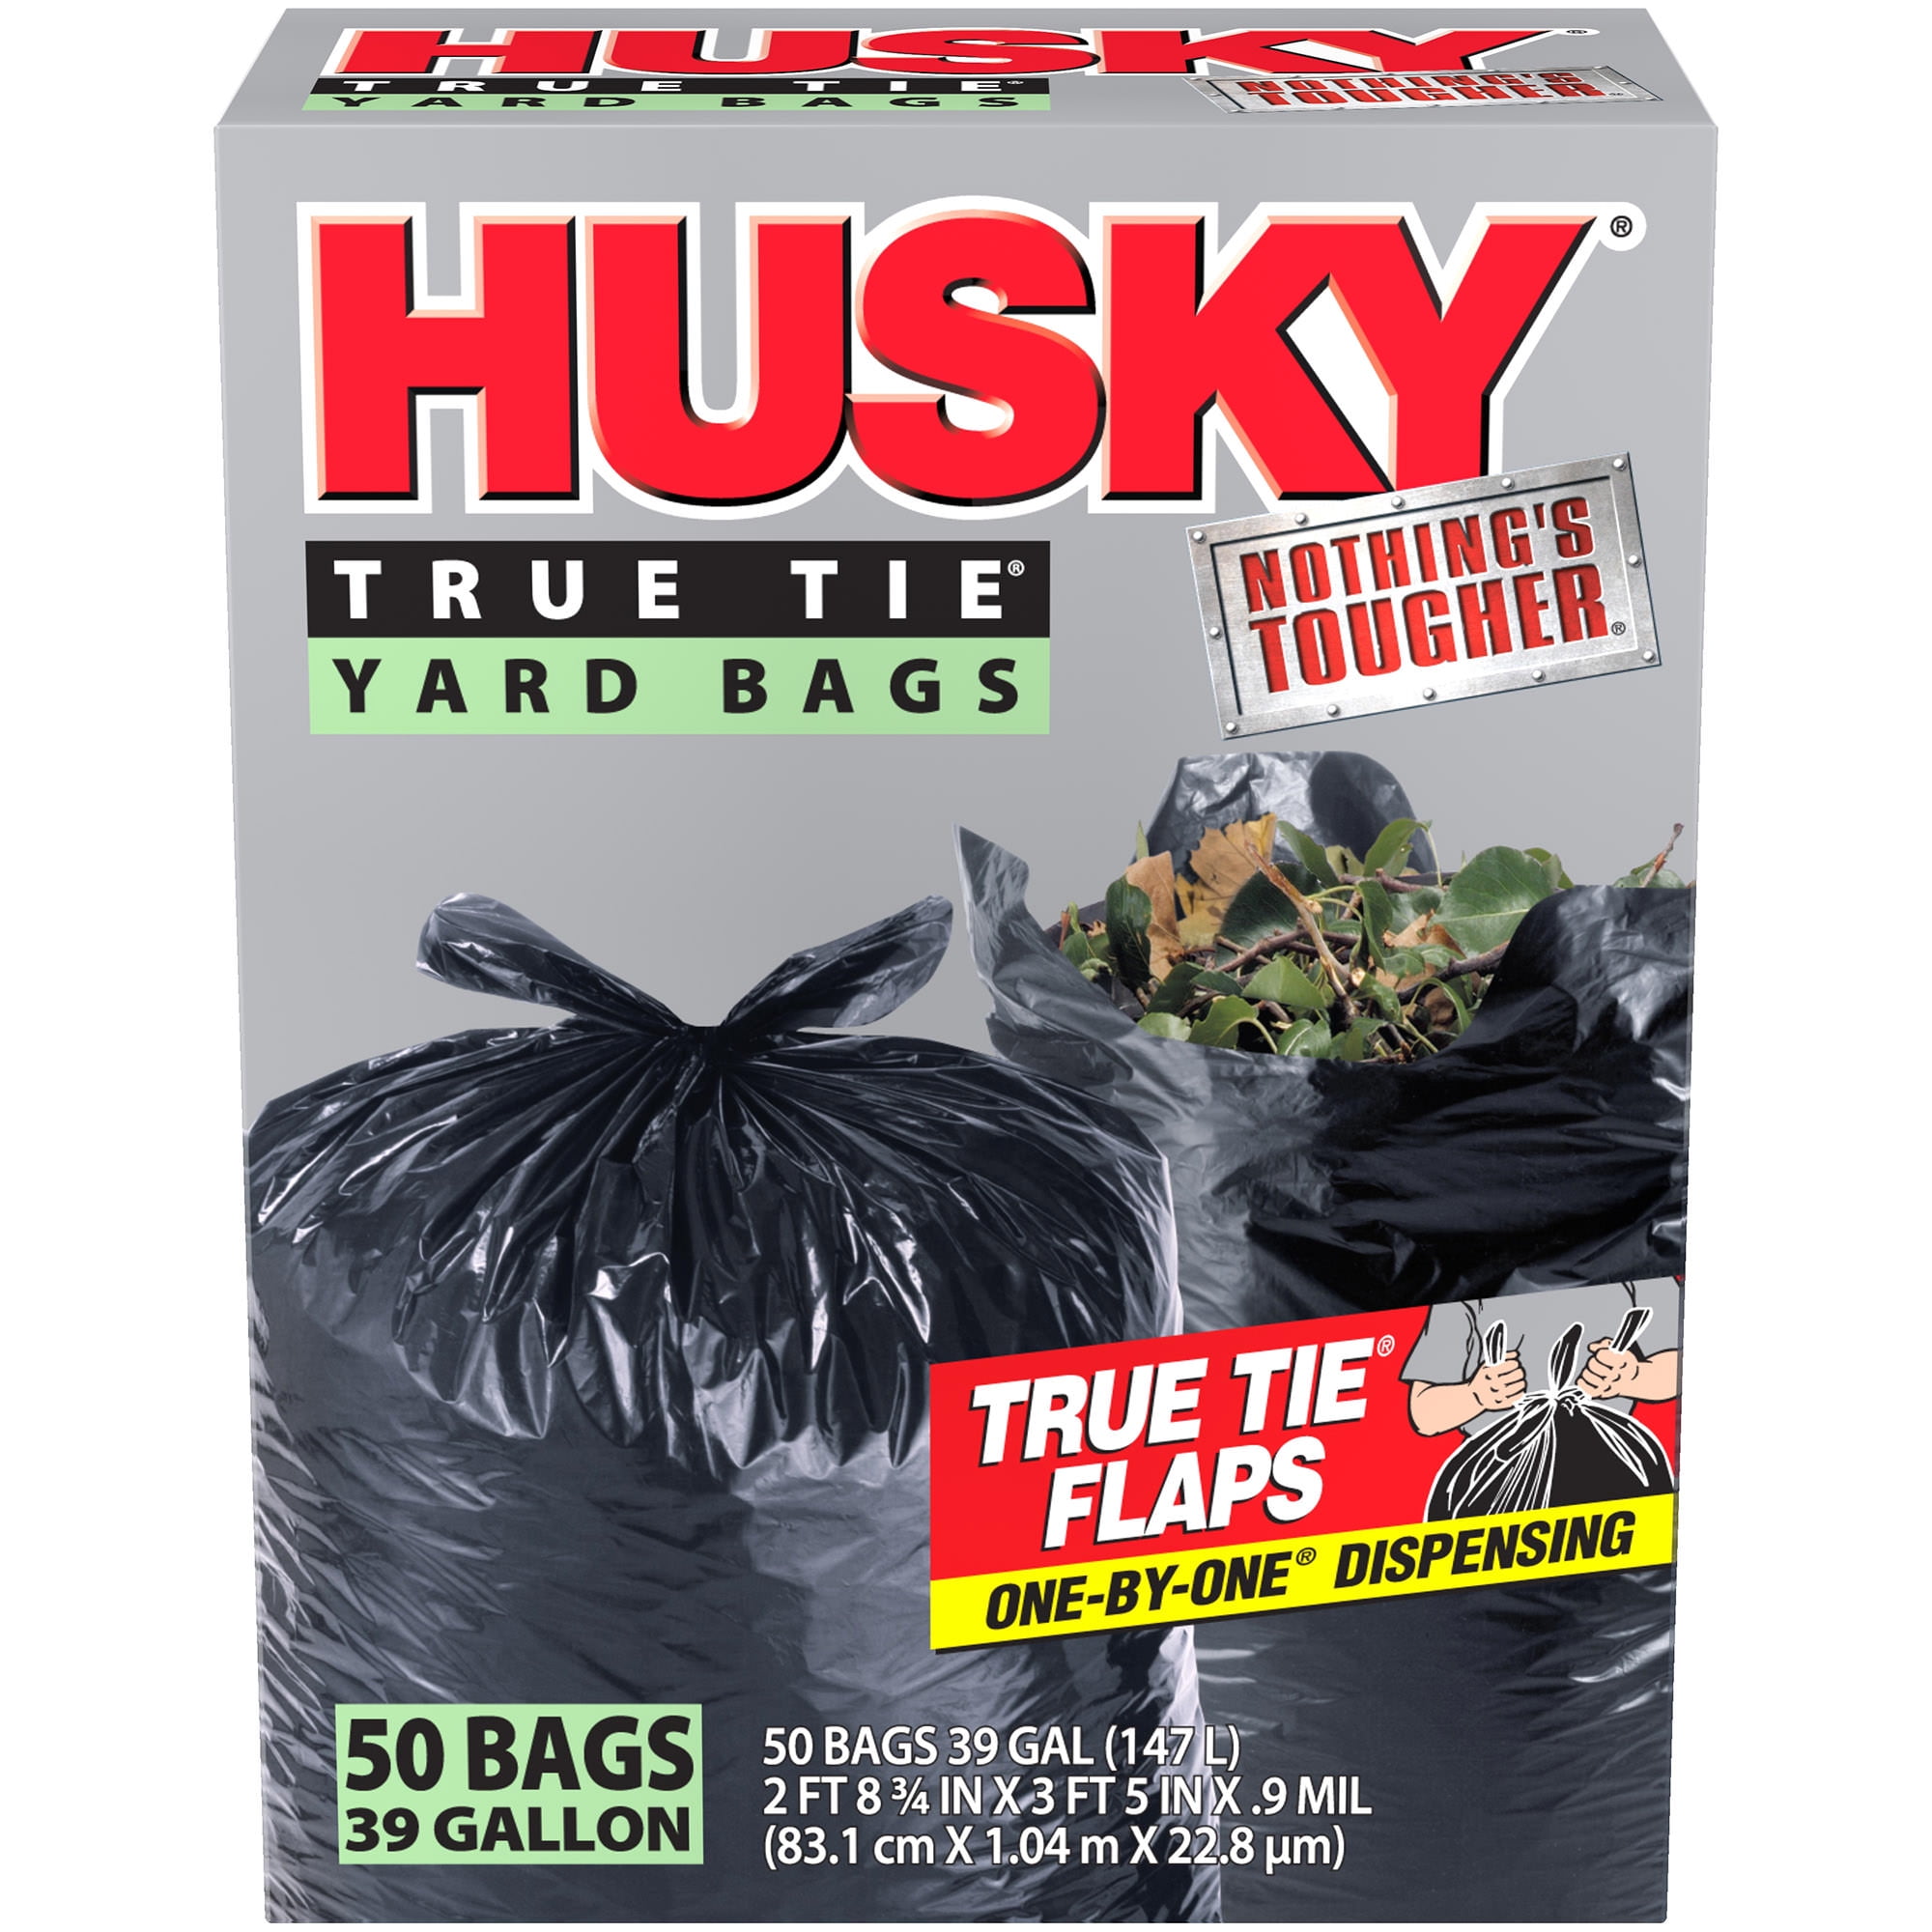 x Heavy Duty 45 Gallon Trash Bags by Ultrasac Huge 50 Count/w Ties 1.8 MIL 